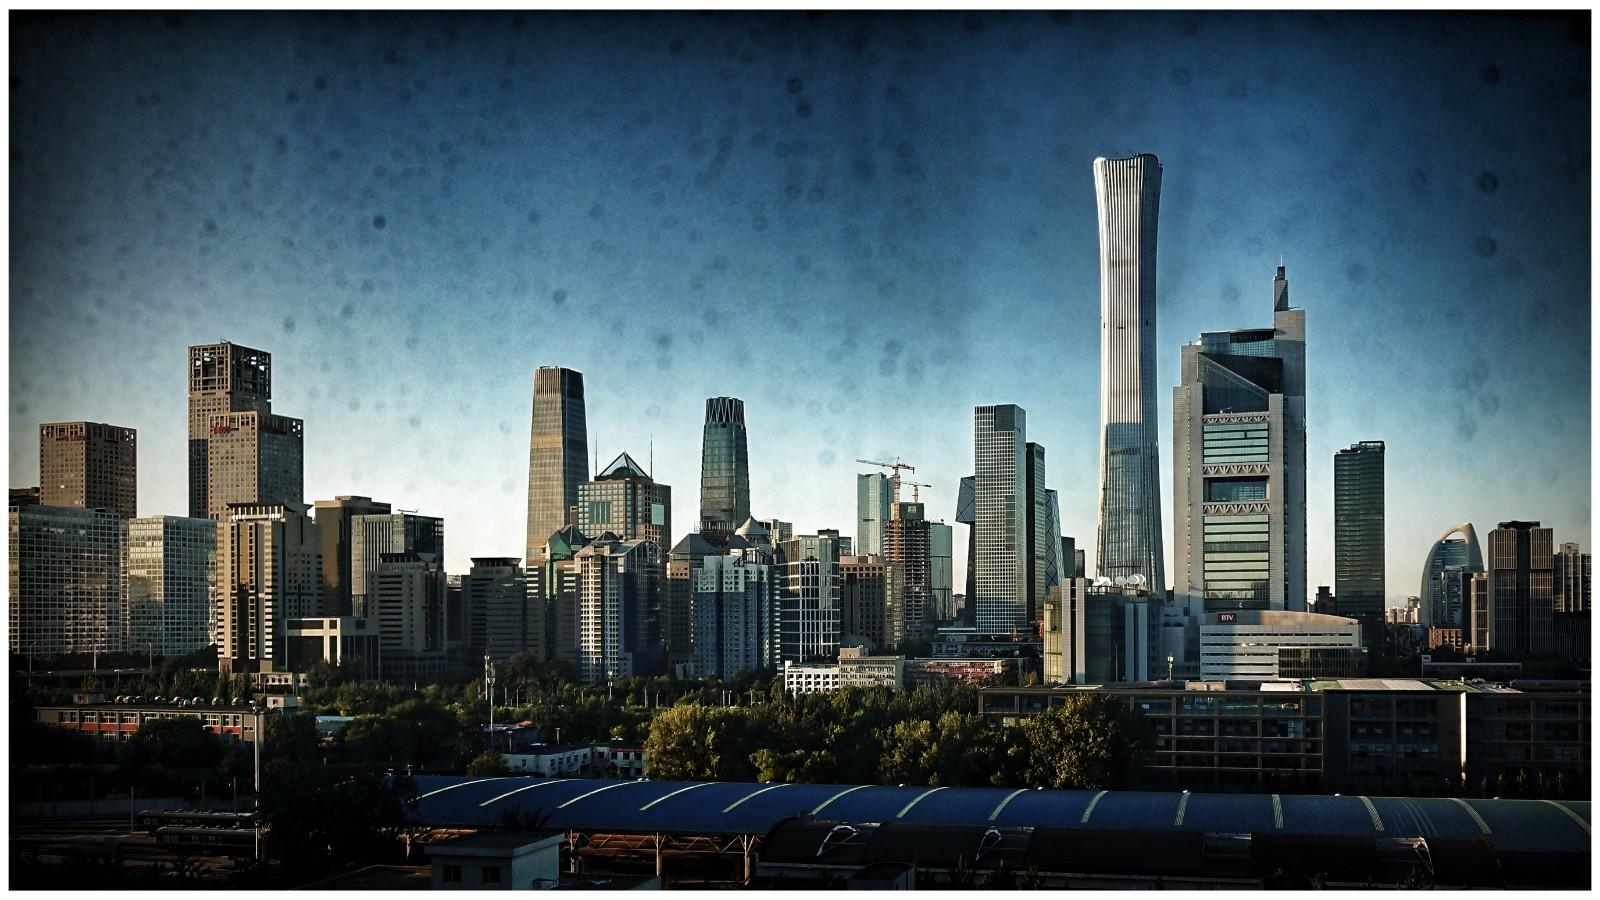 Pekings Chaoyang CBD (Central Business District) durch ein beflecktes Fenster gesehen 